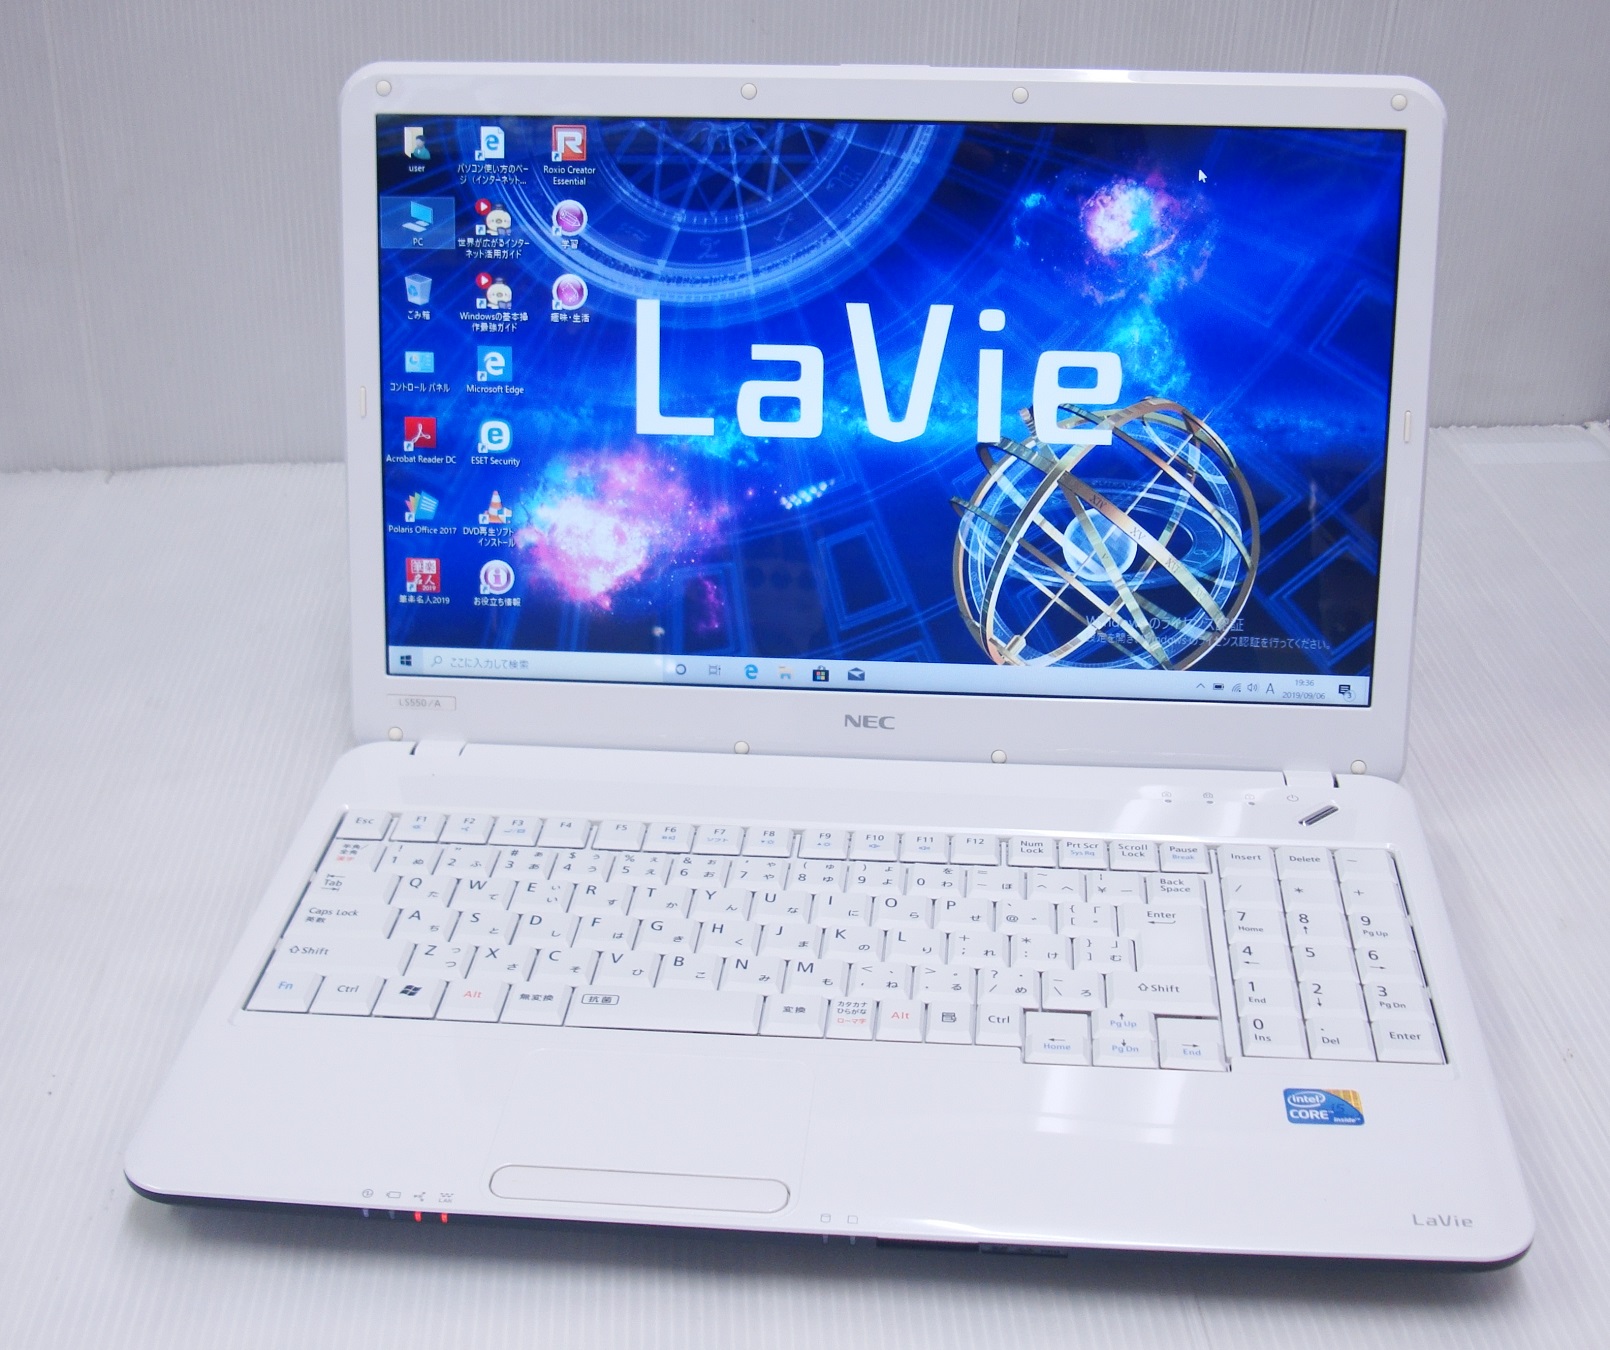 NEC LaVie PC-LS550/A CPU:Corei5 430M 2.27GHz / メモリ:4GB / HDD ...